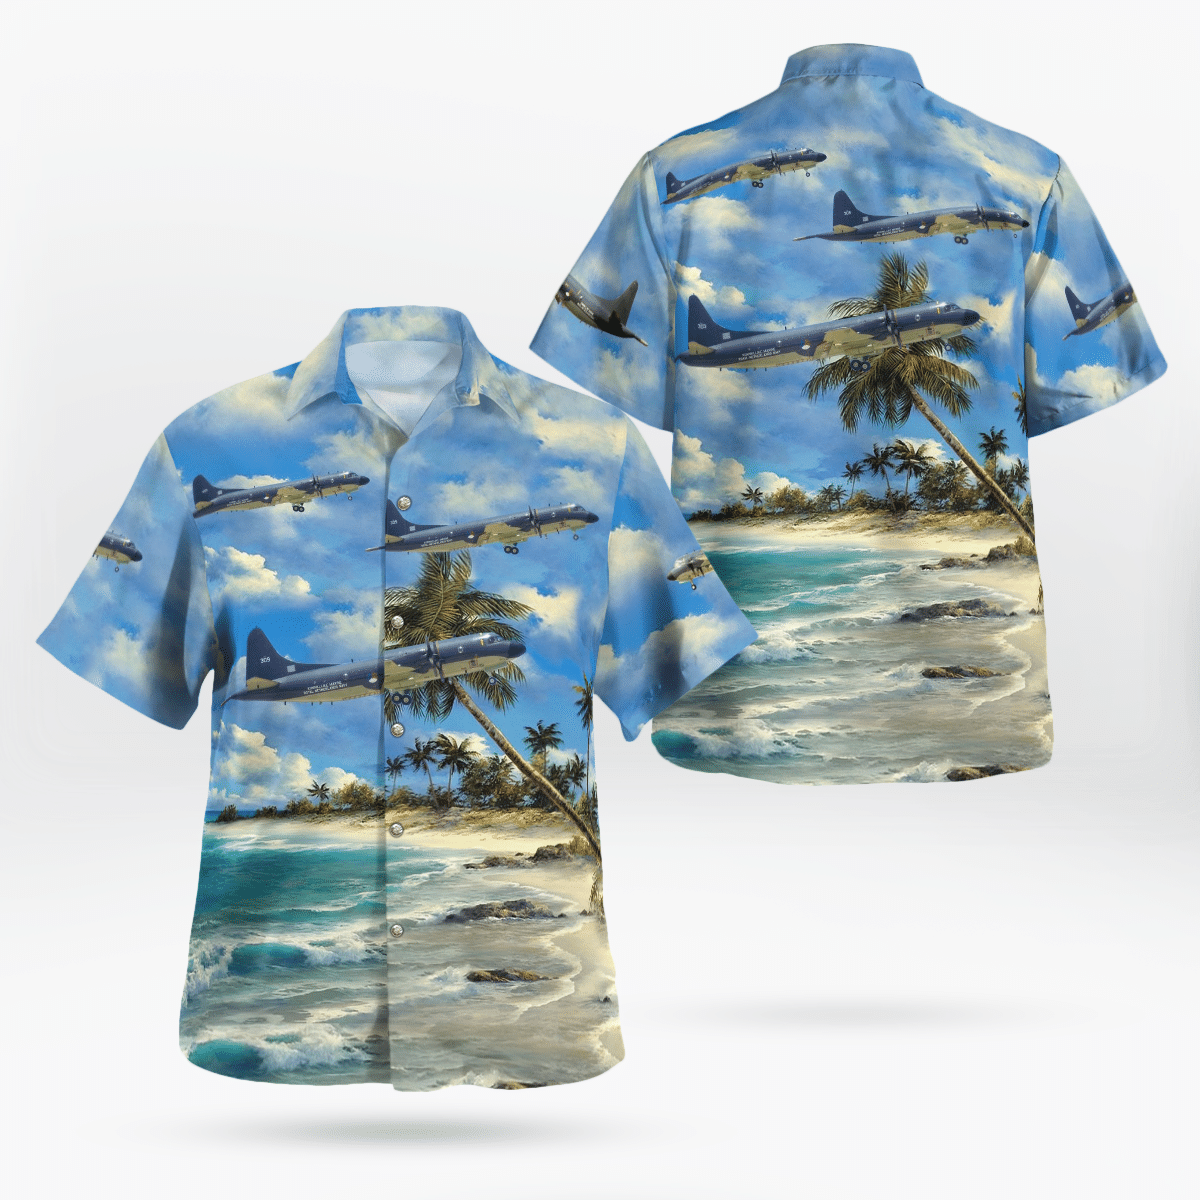 Great summer beachwear for you 147